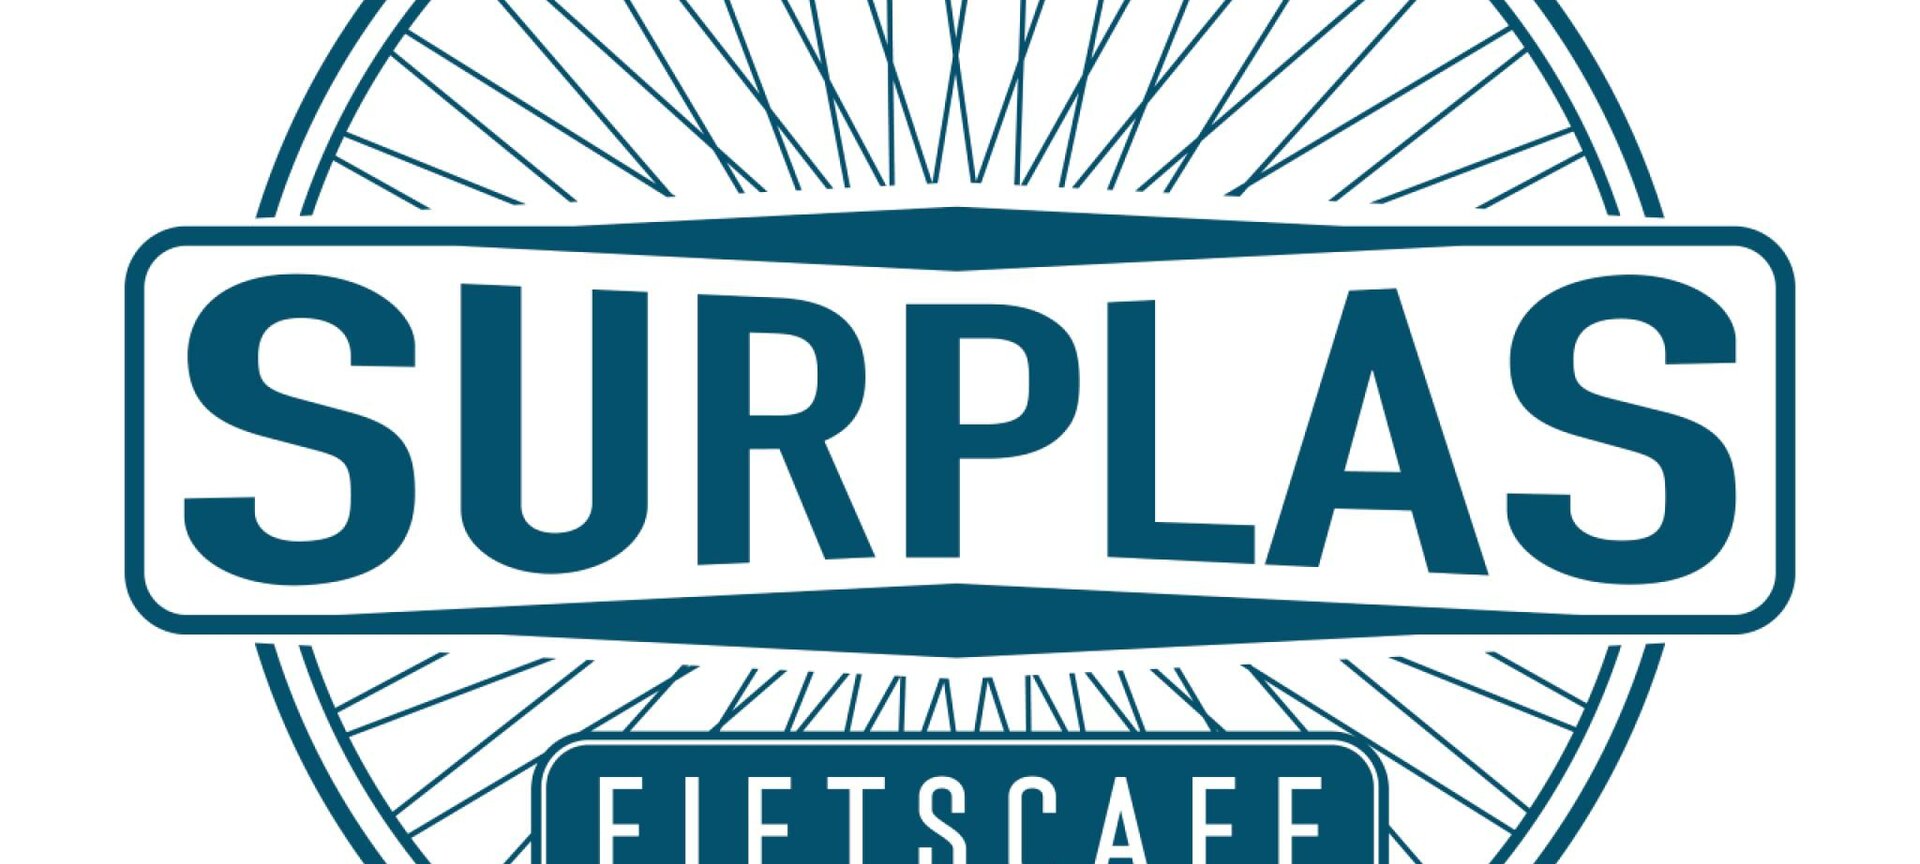 Fietscafe Surplas - logo